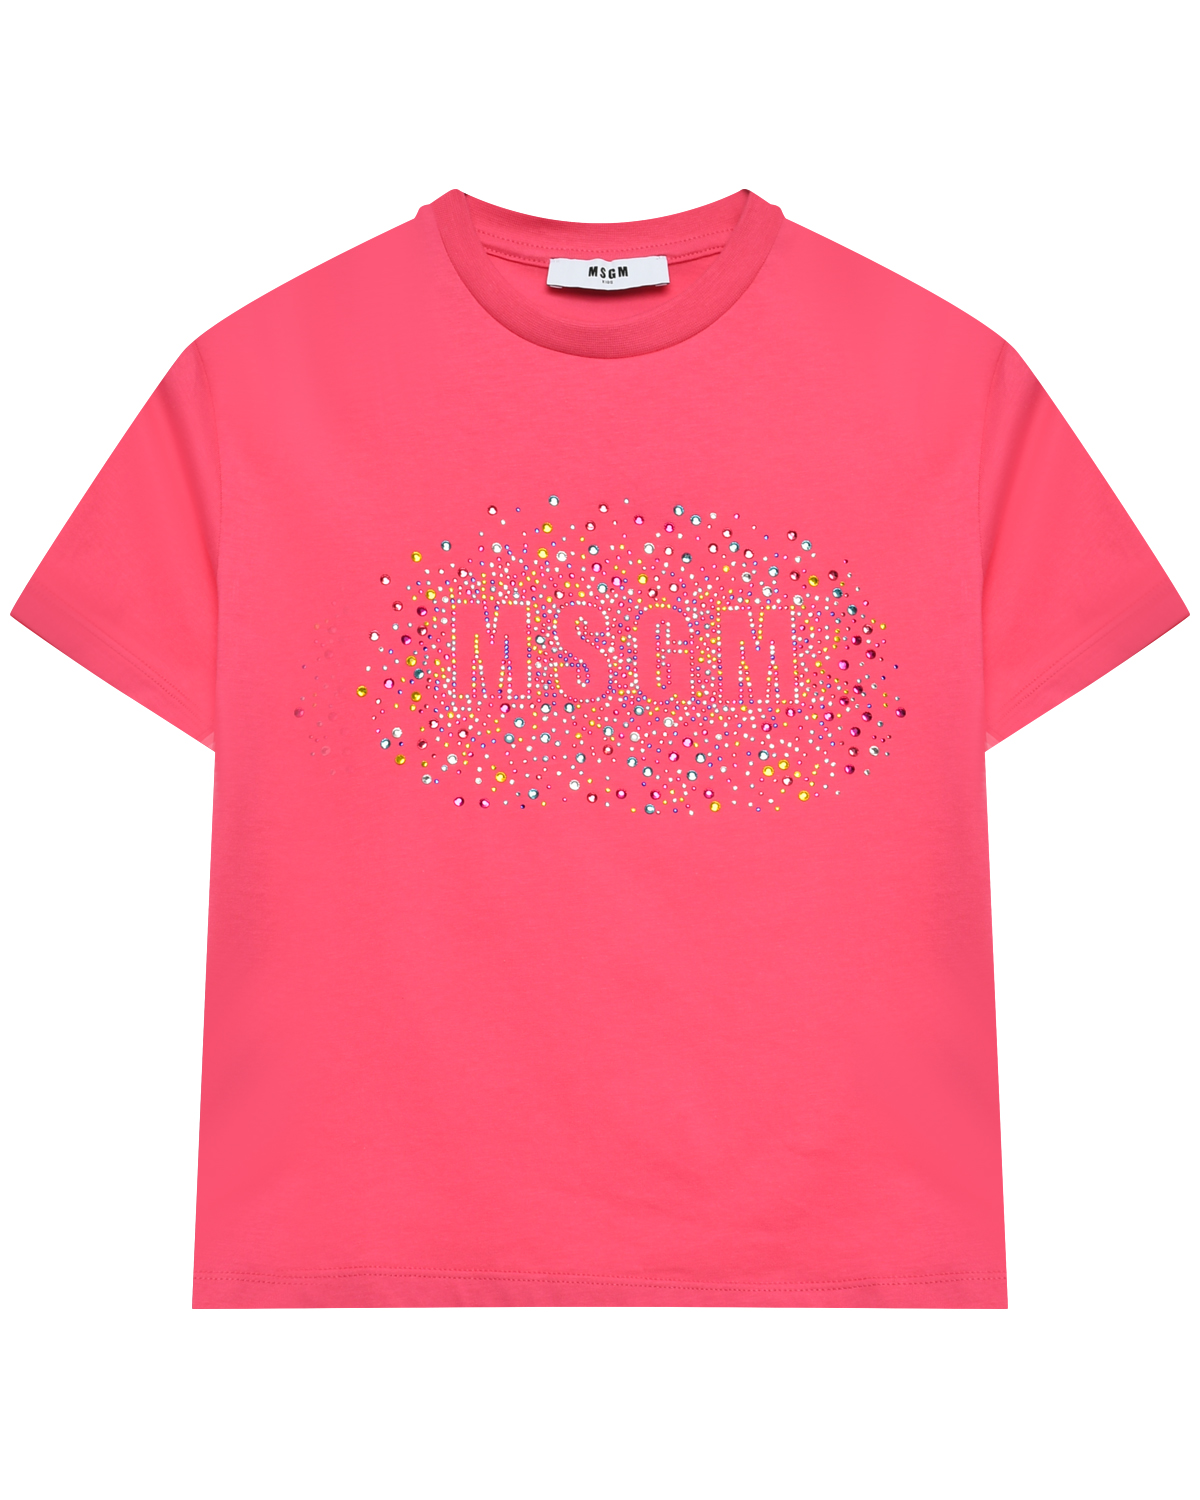 Футболка со стразами на логотипе, розовая MSGM розовая трикотажная футболка gulliver 98